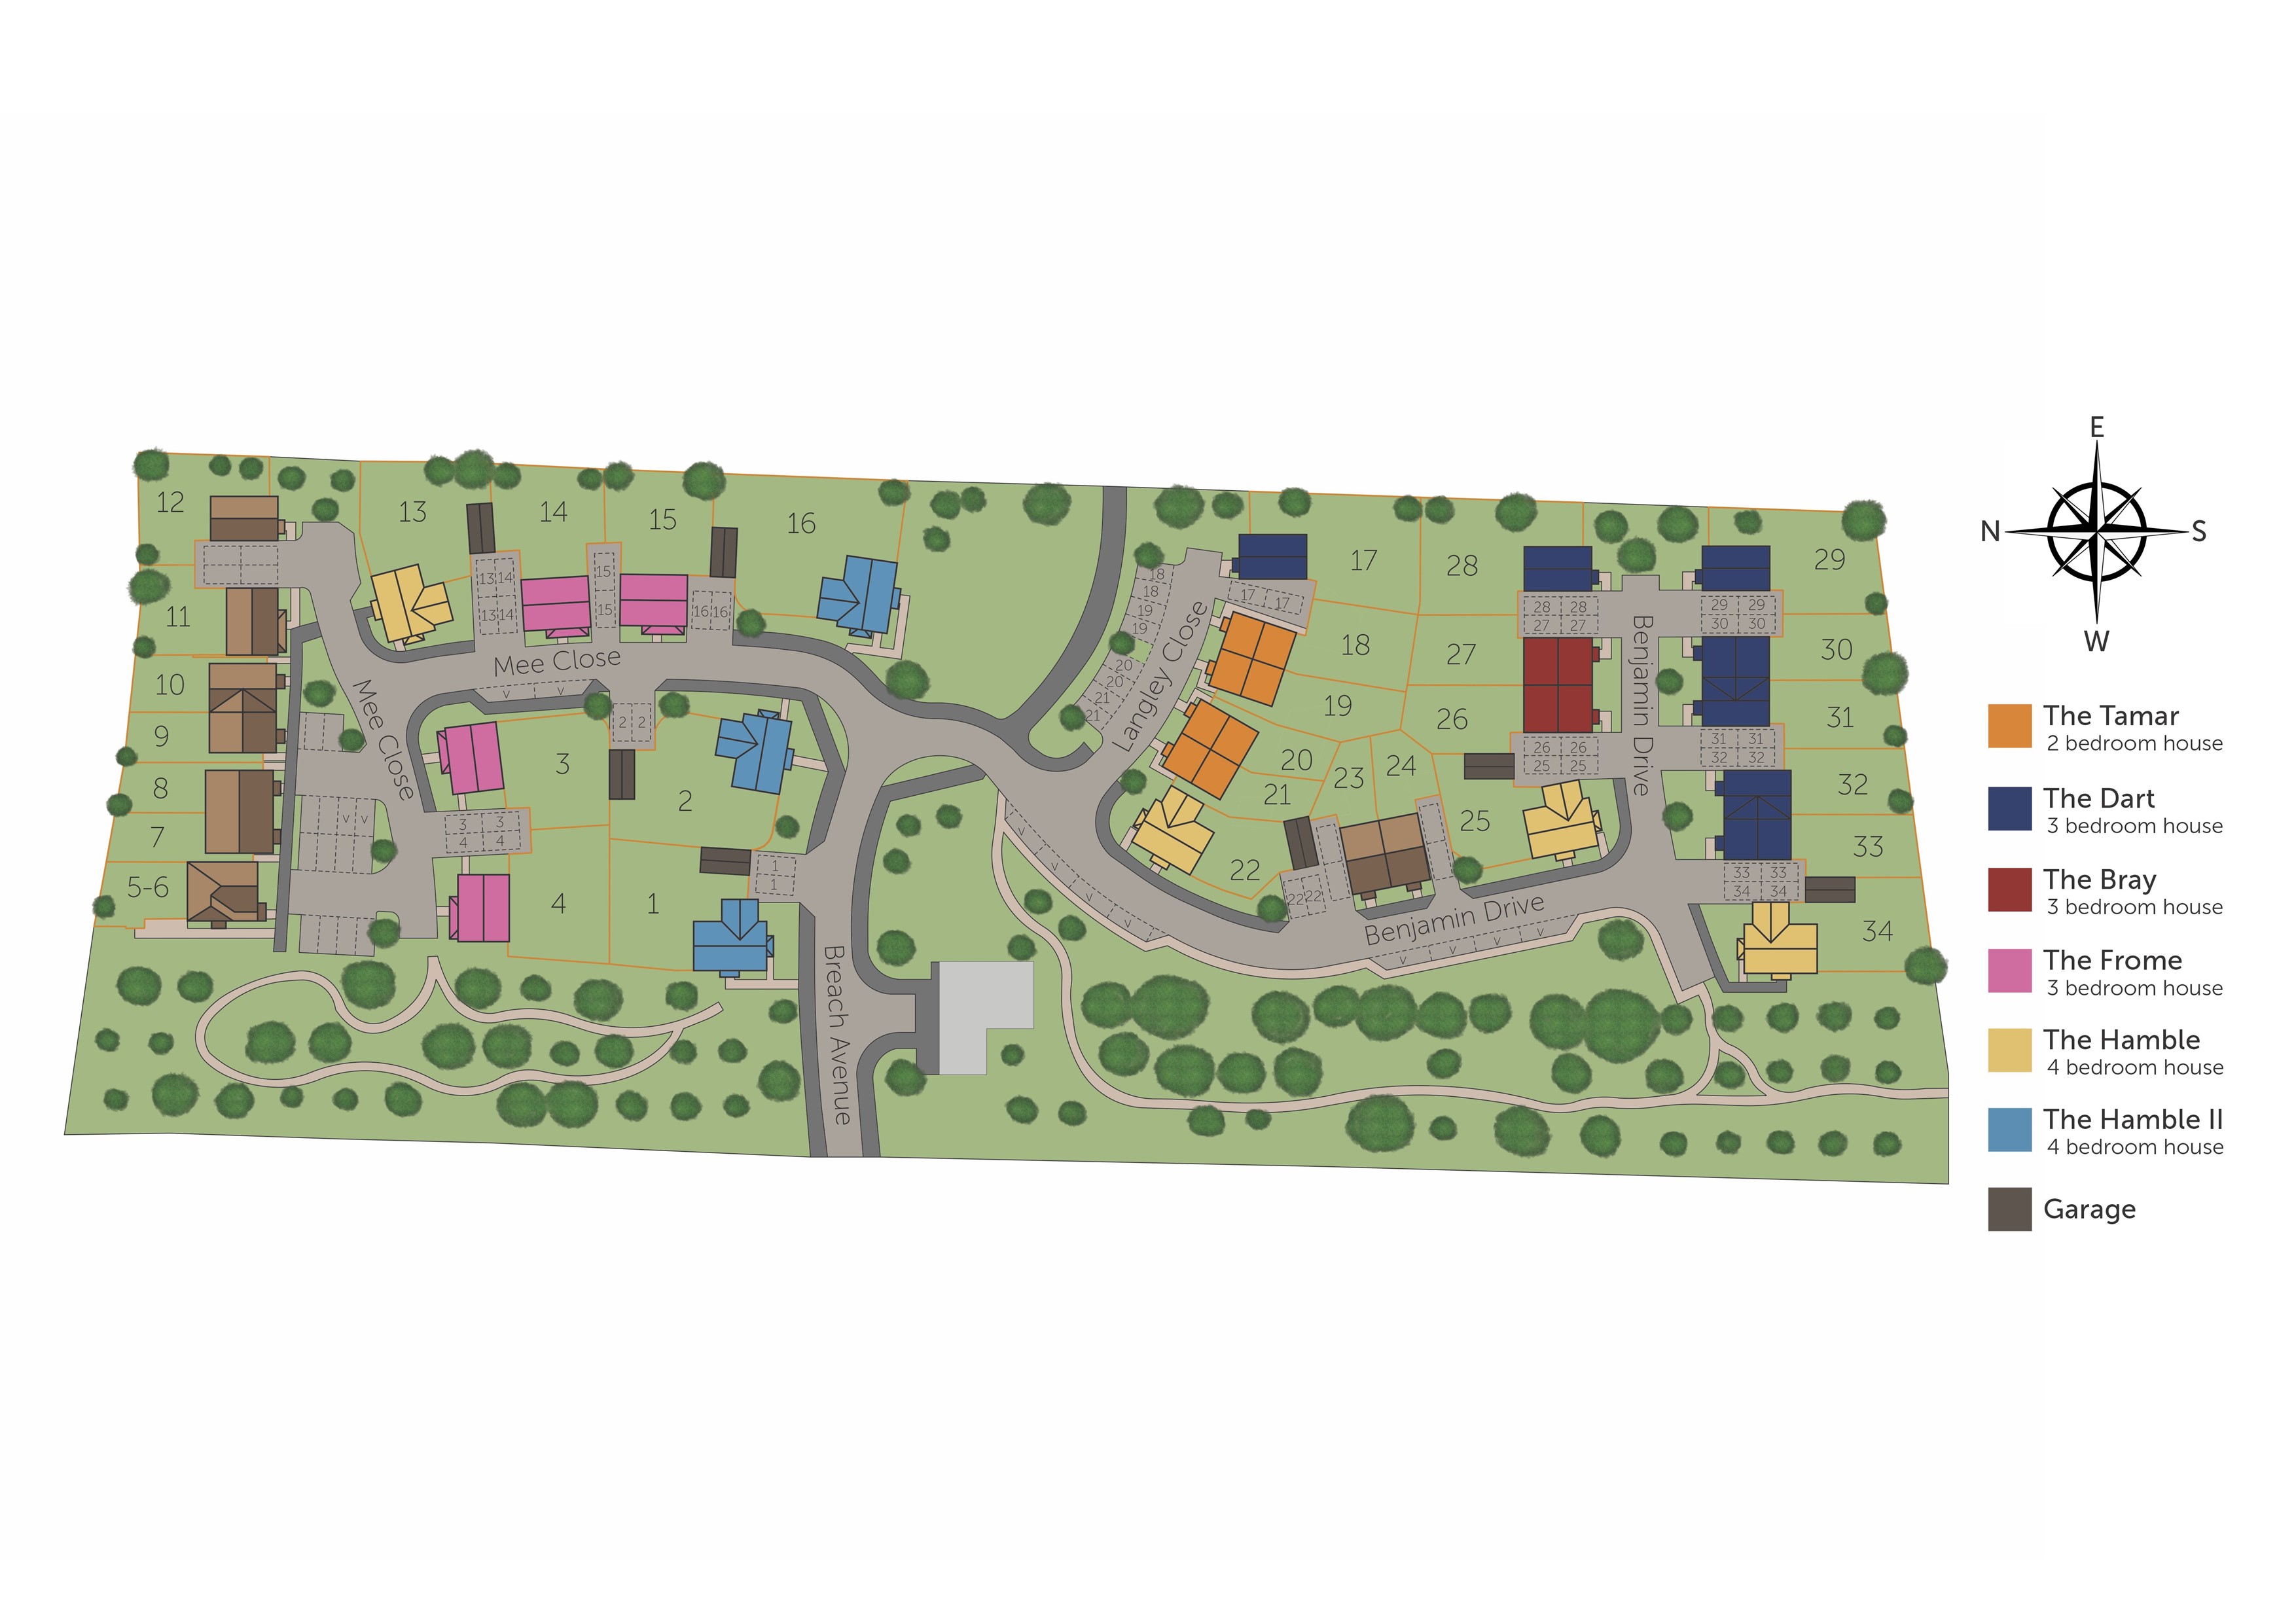 Development map showing plot locations